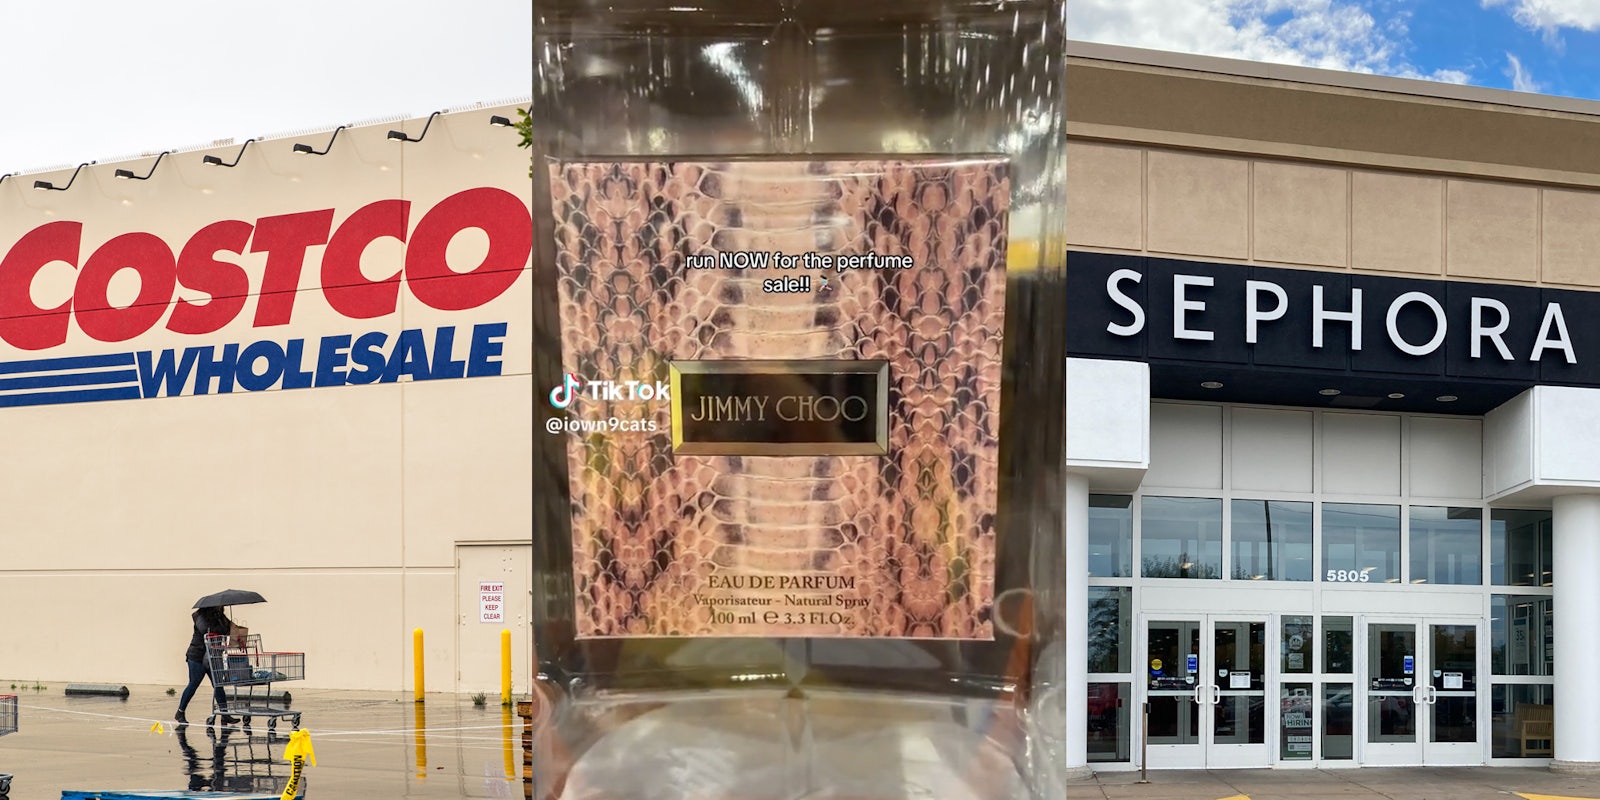 Costco storefront(l), Bottle of Jimmy Choo perfume(c), Sephora storefront(r)